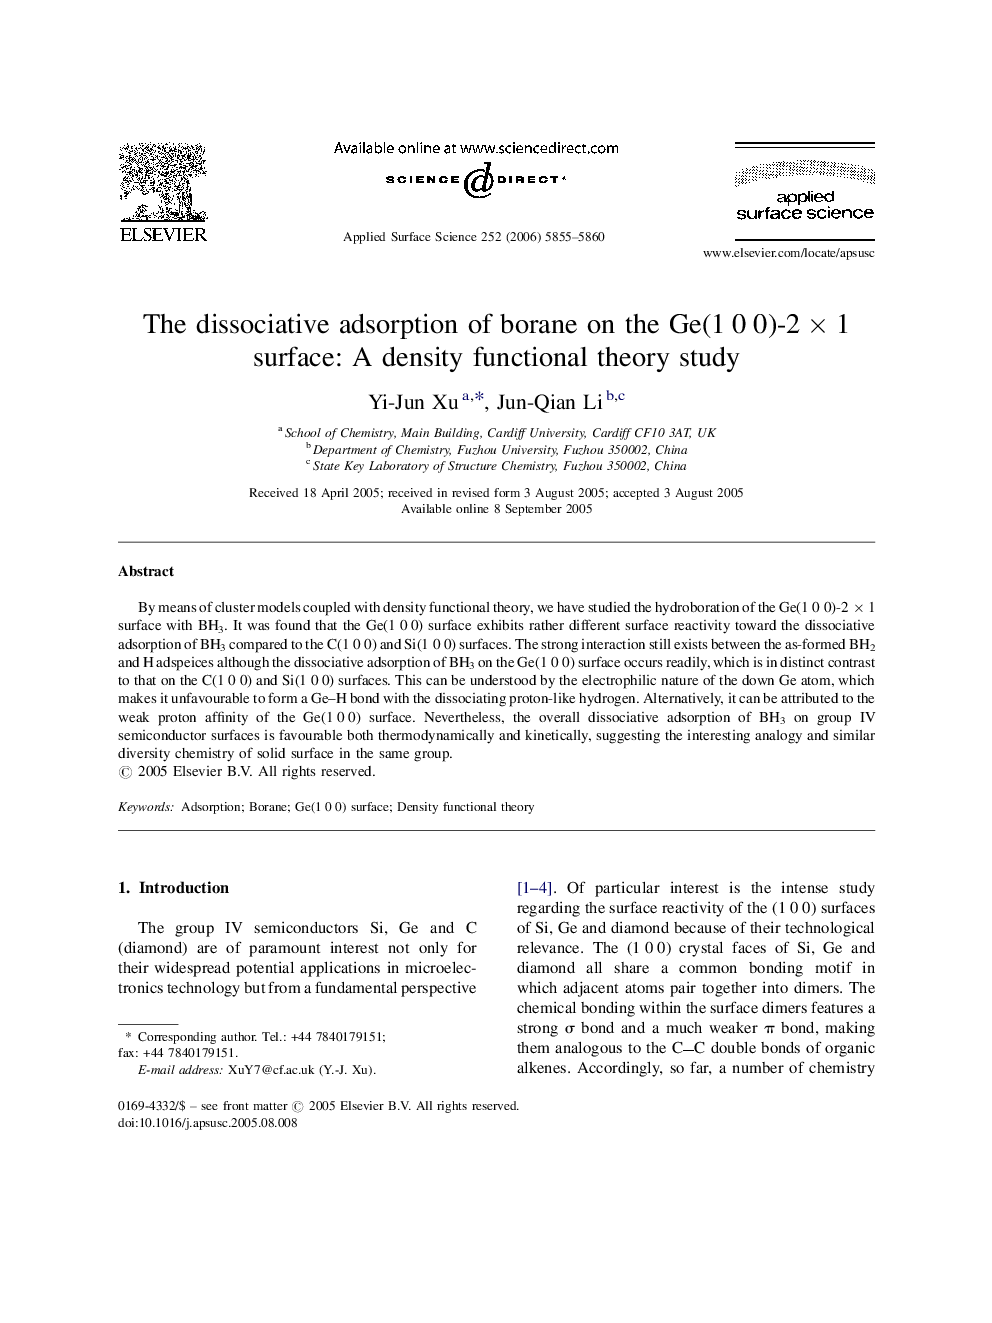 The dissociative adsorption of borane on the Ge(1 0 0)-2 Ã 1 surface: A density functional theory study